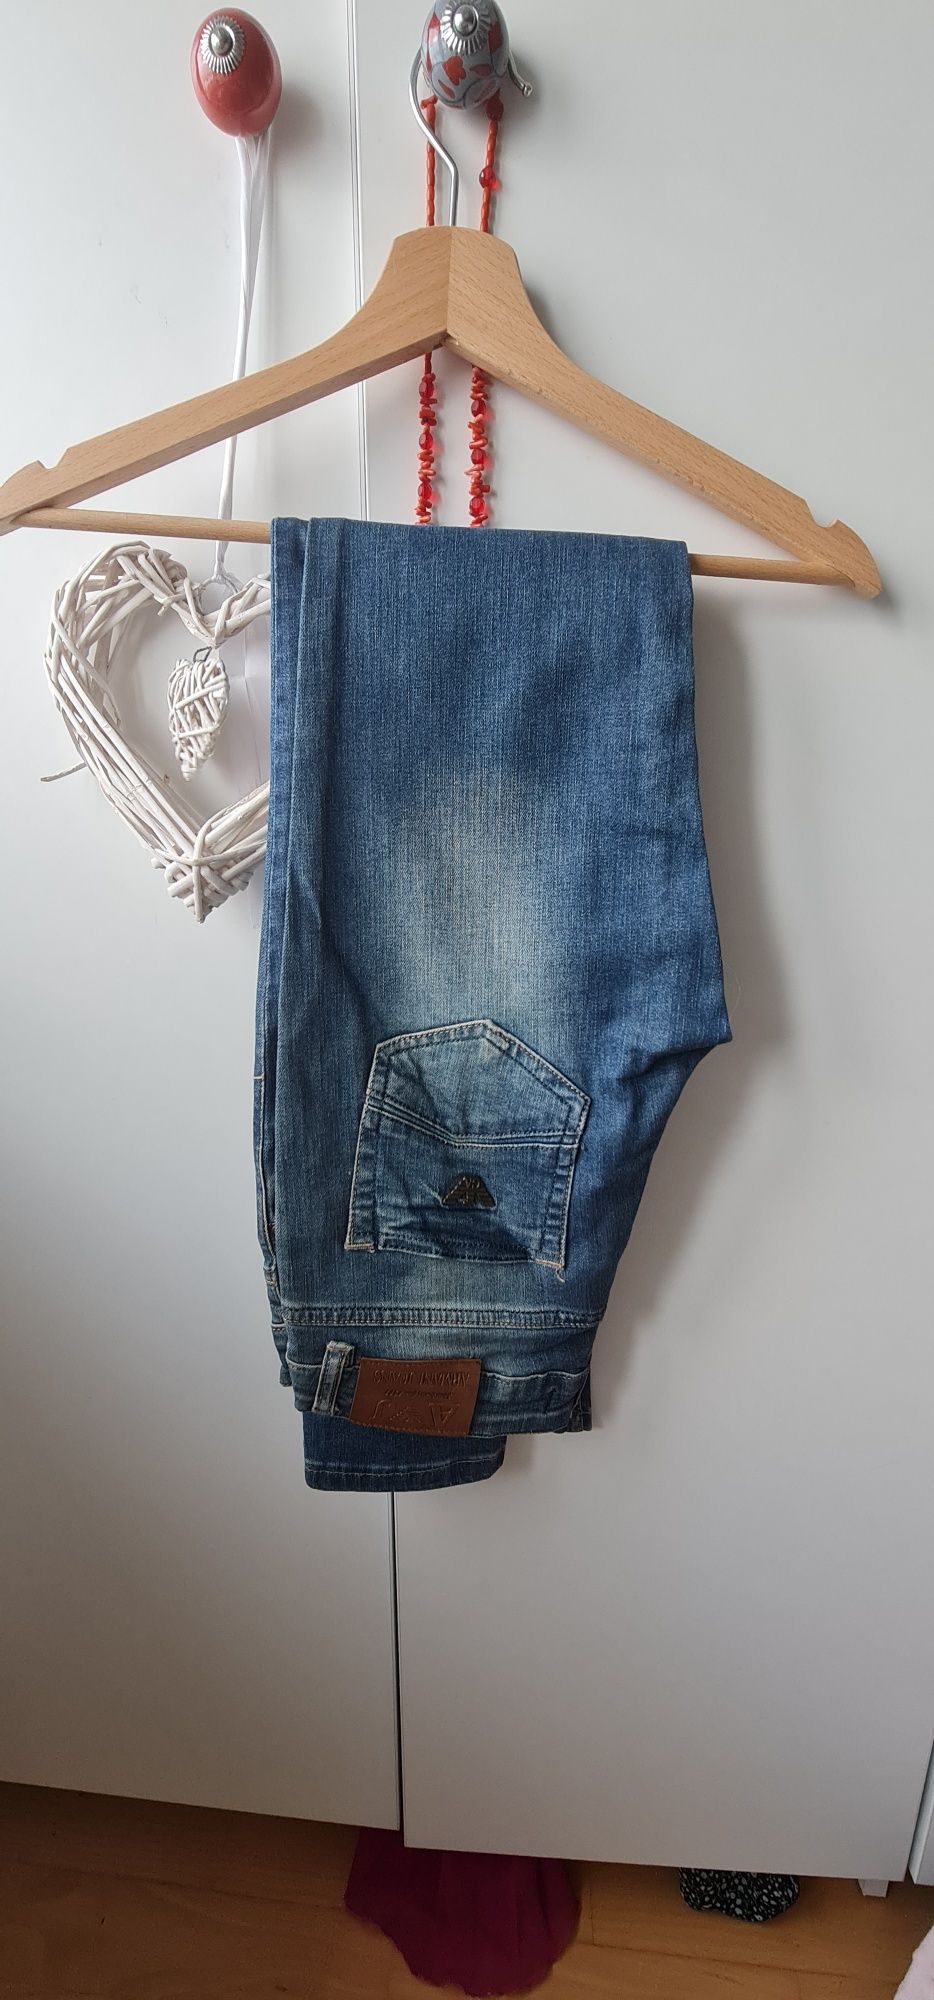 Jeansy Armani jeans r. 34/36